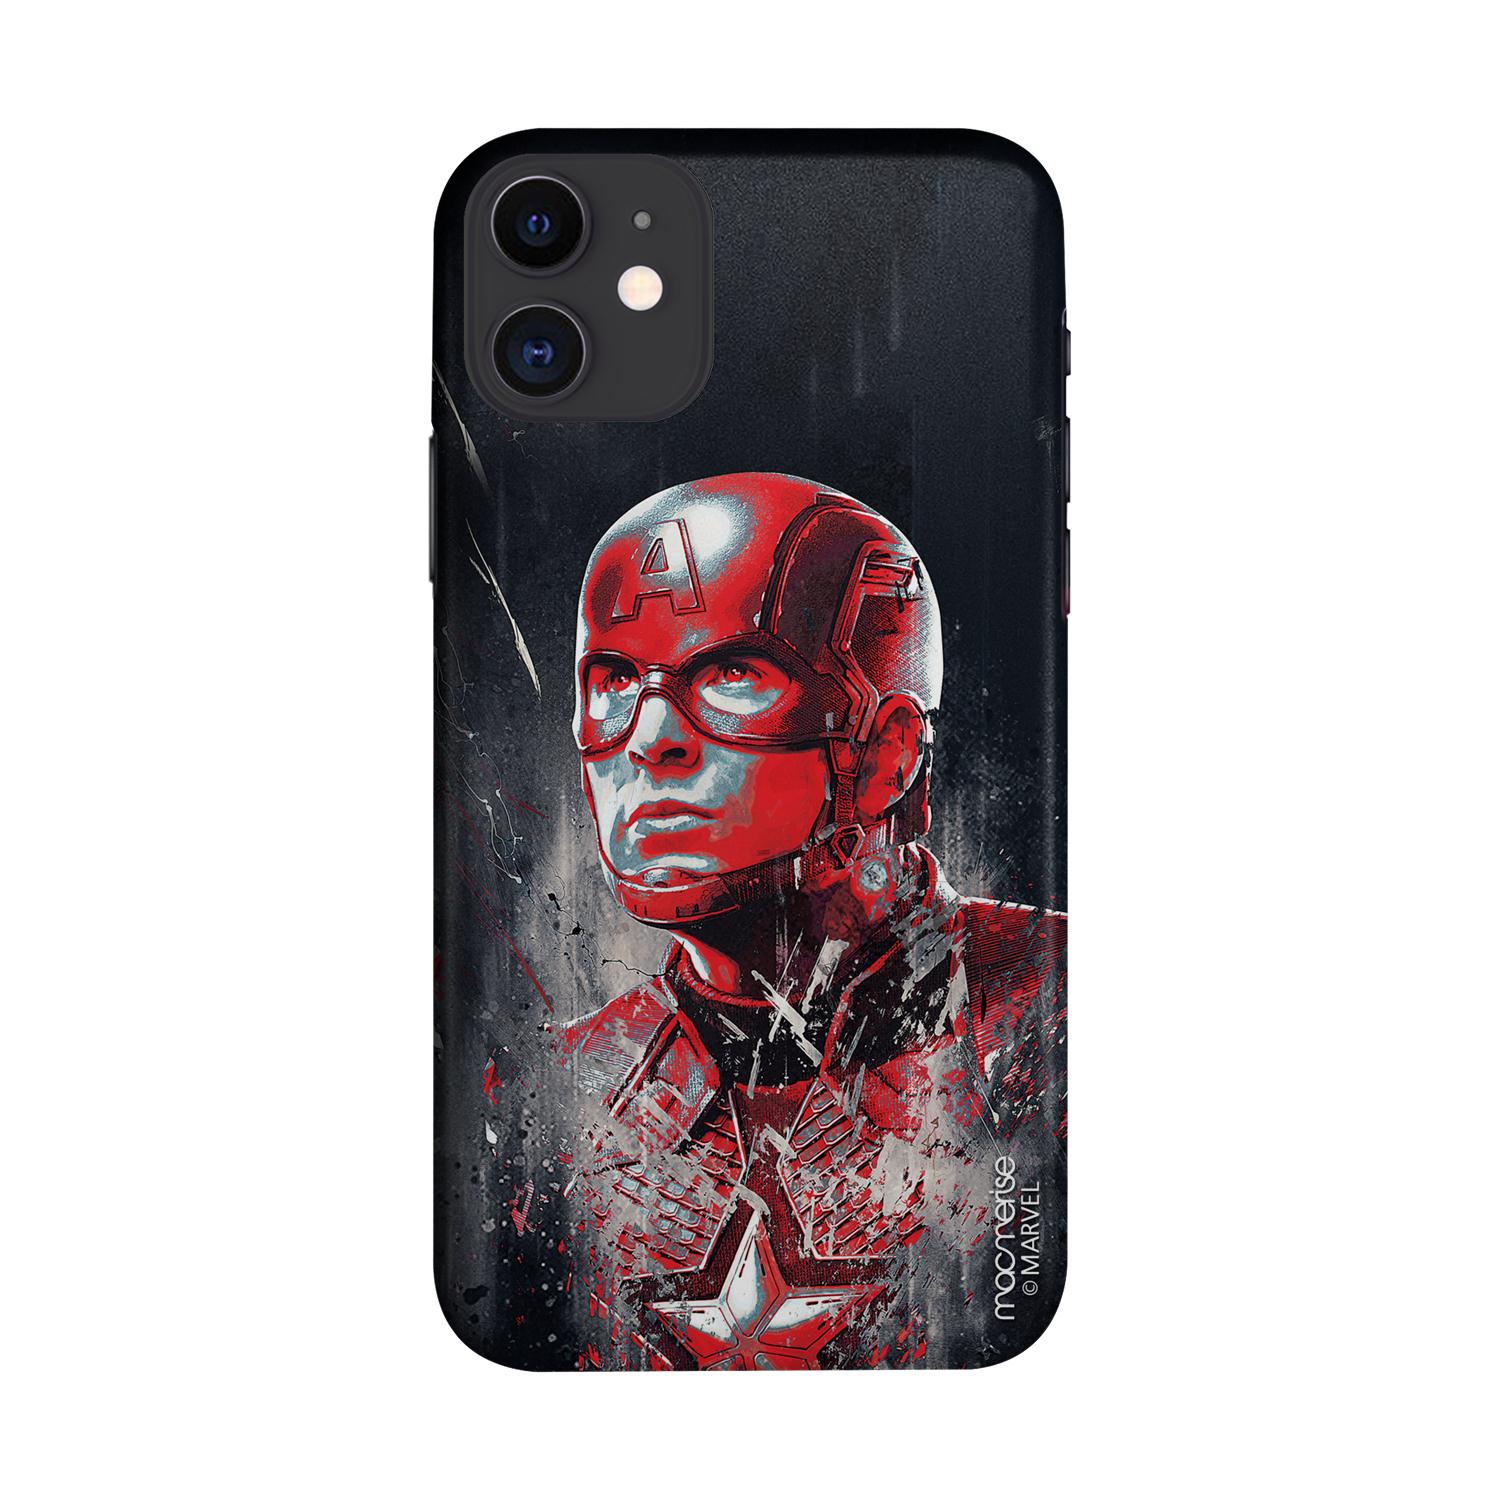 Buy Charcoal Art Captain America - Sleek Phone Case for iPhone 11 Online